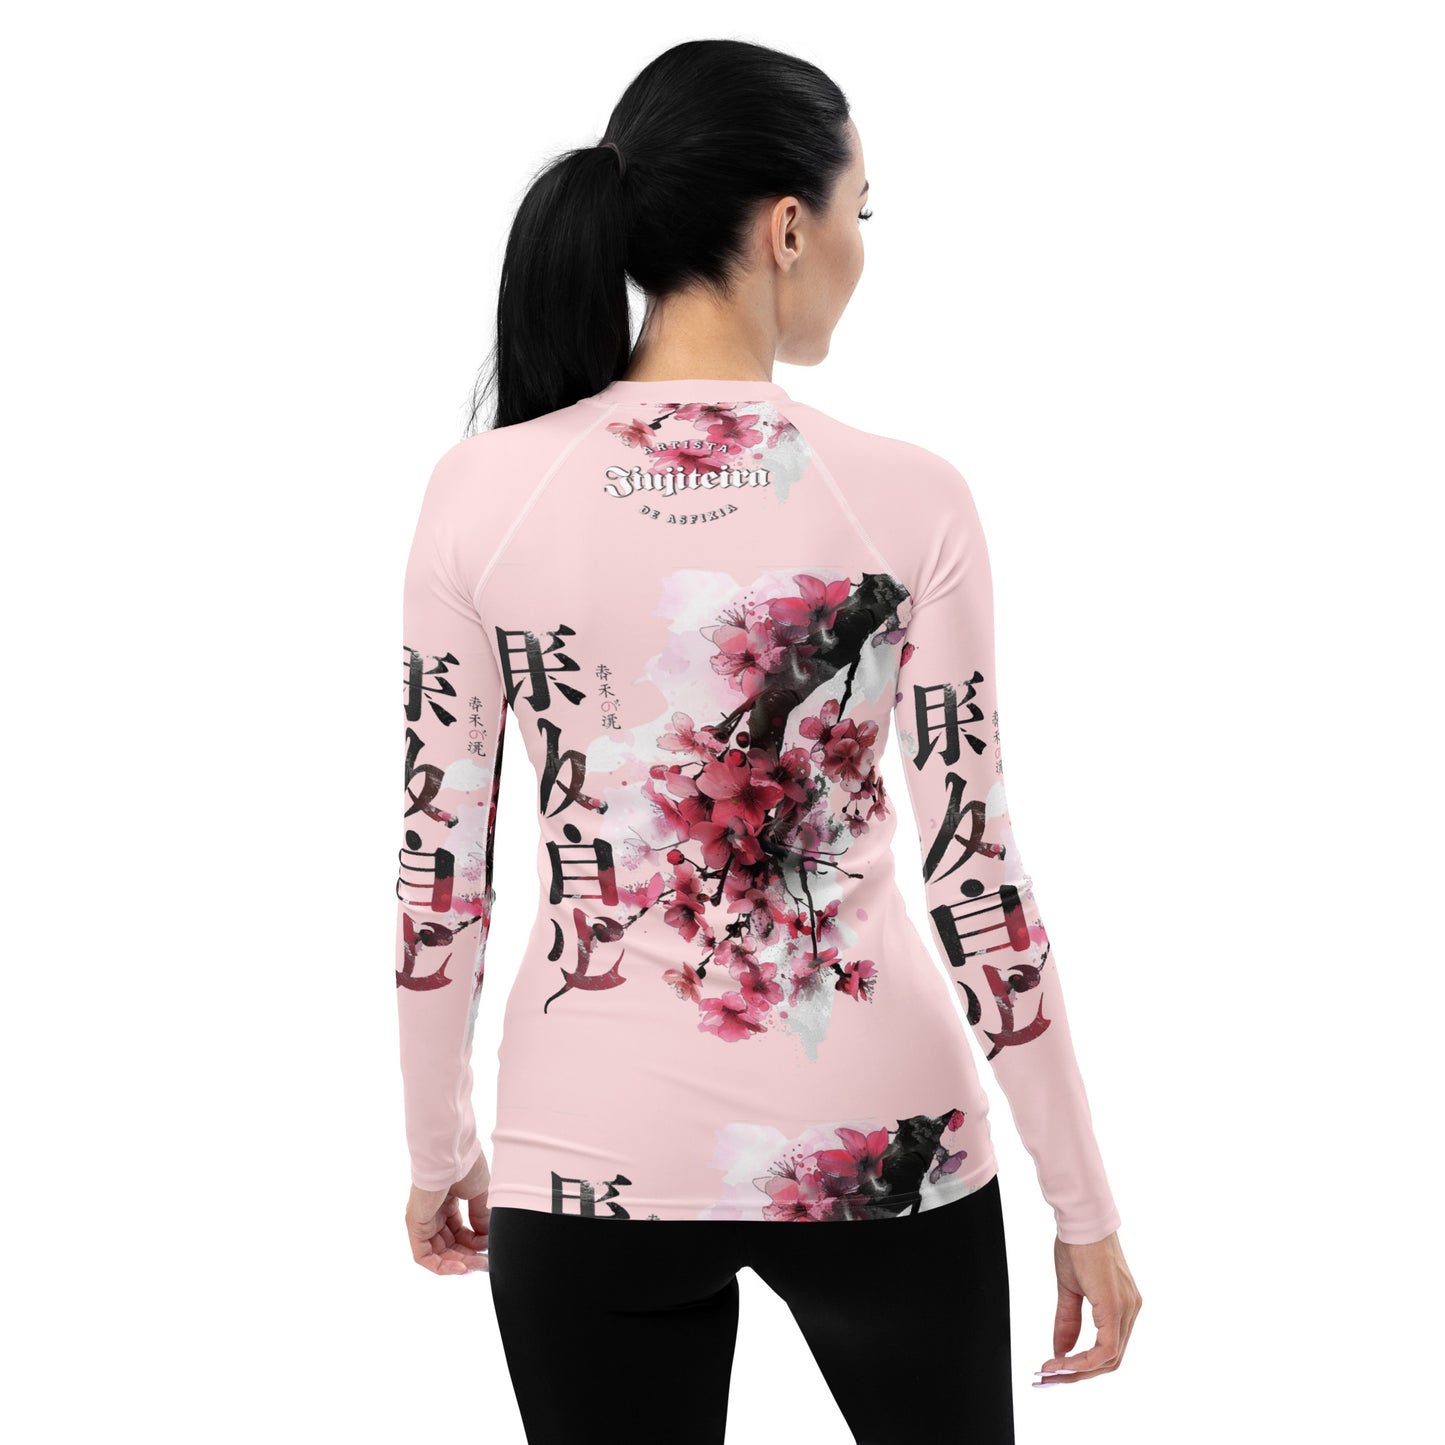 Women's Rash Guard- Cherry Blossom Pink